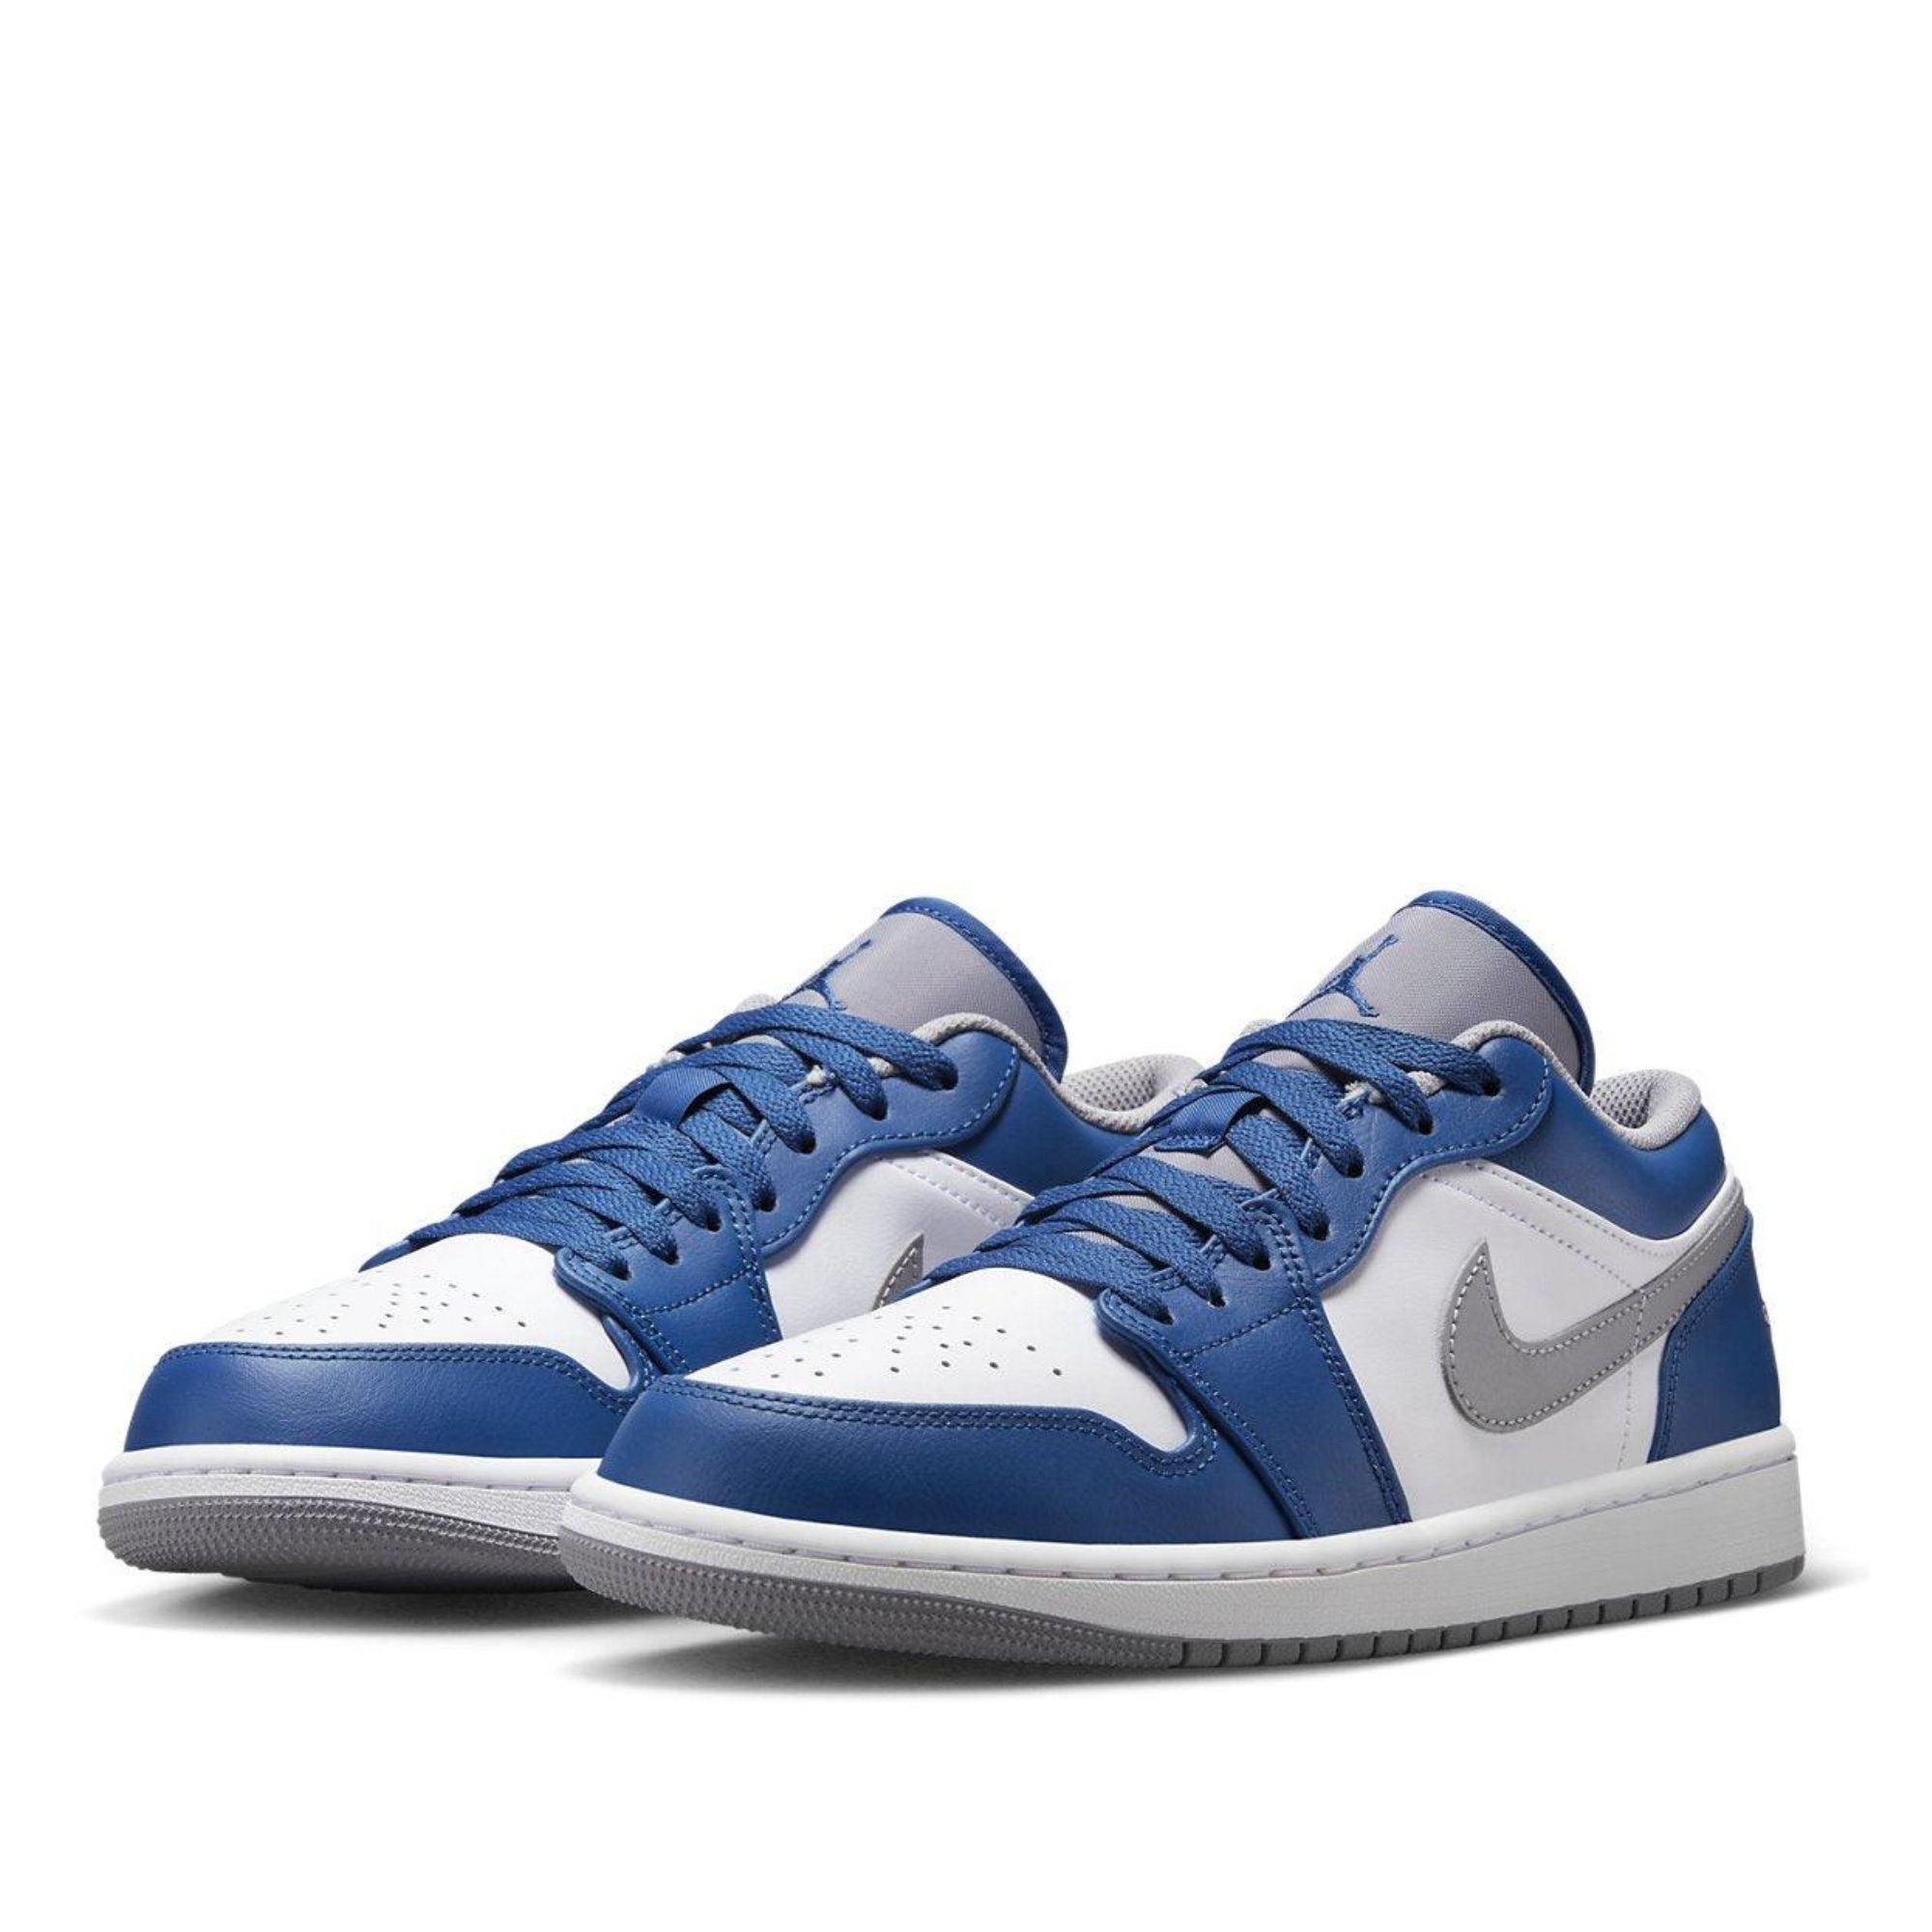 Air Jordan 1 Low ’True Blue’ Us 12 / W 13.5 Sneakers